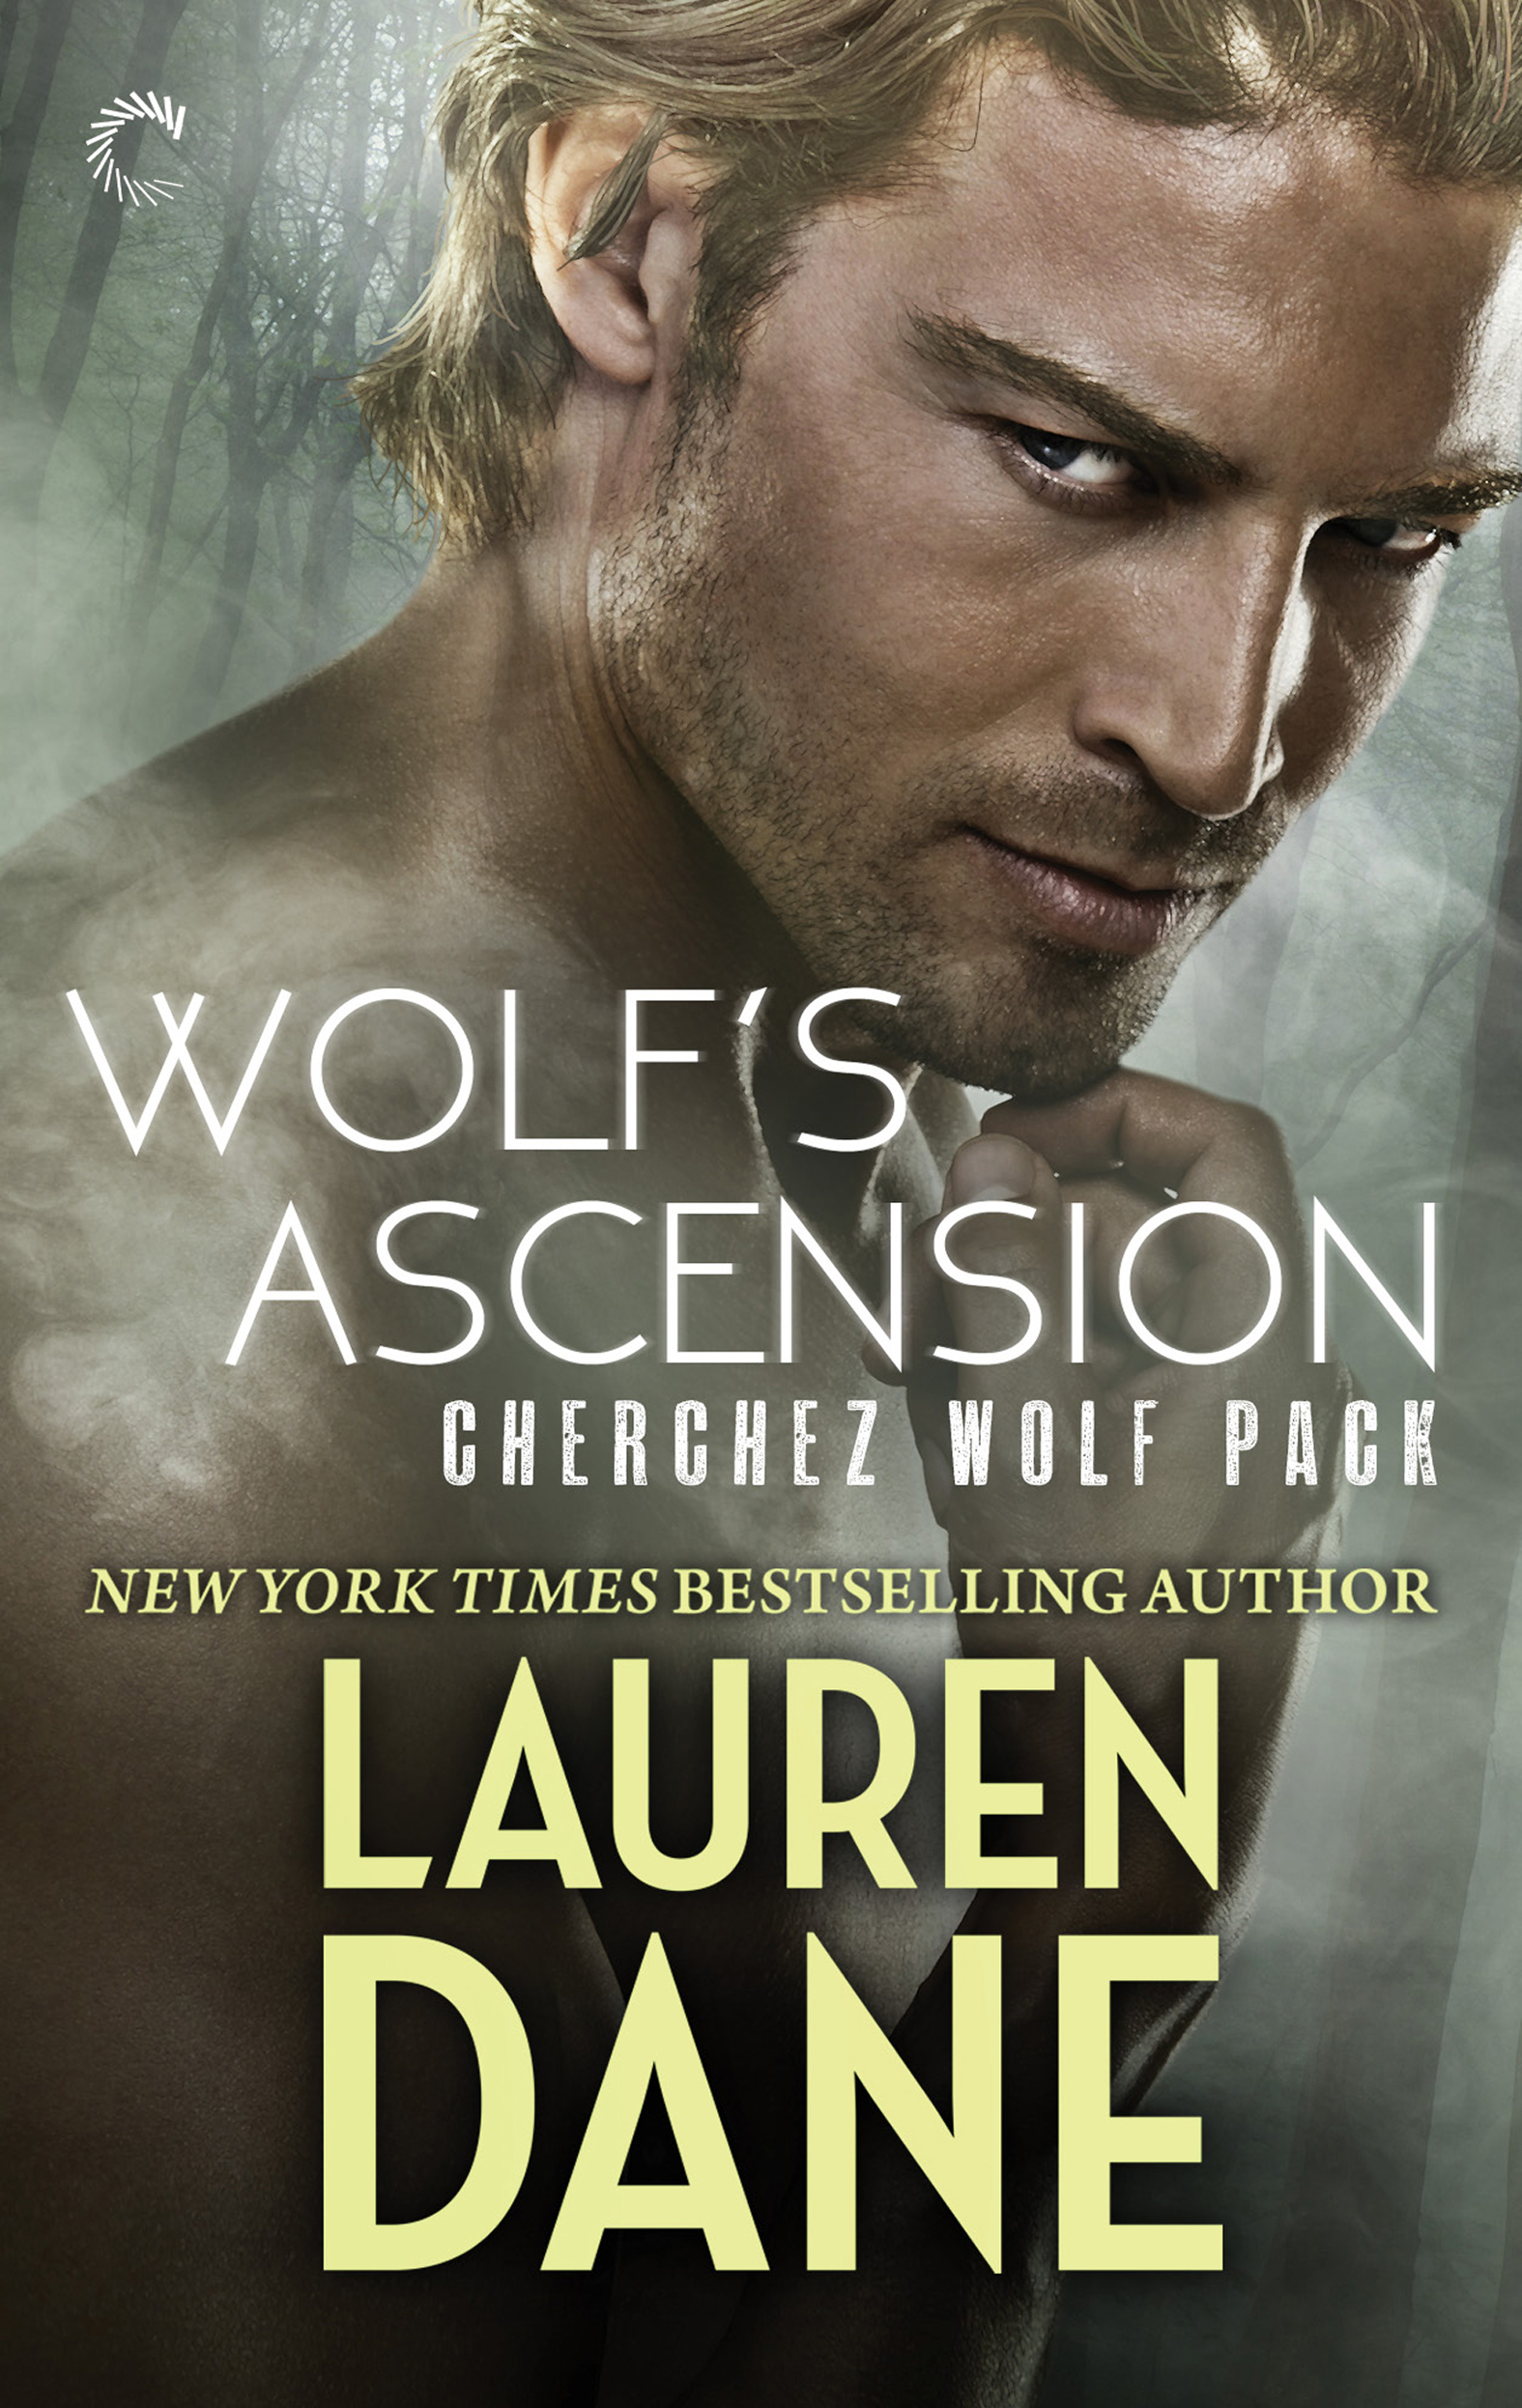 Wolf's Ascension (2016) by Lauren Dane